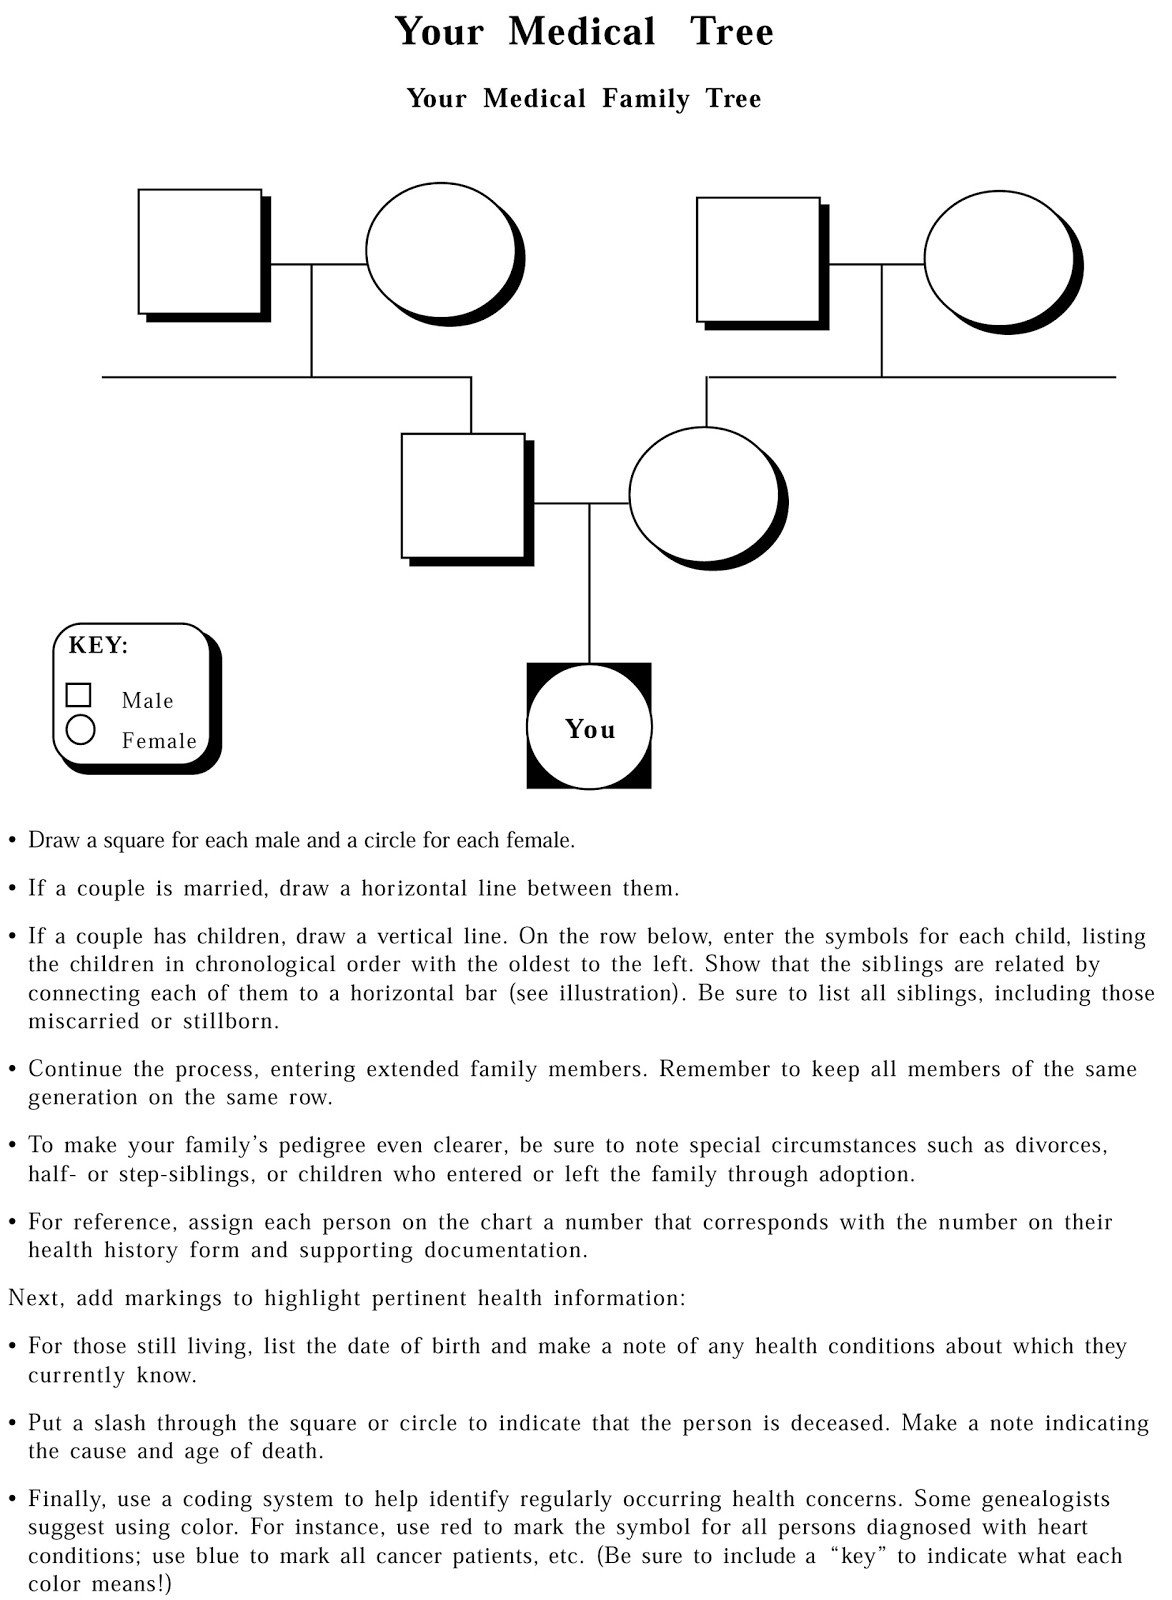 Family Medical Tree A3genealogy October 2015